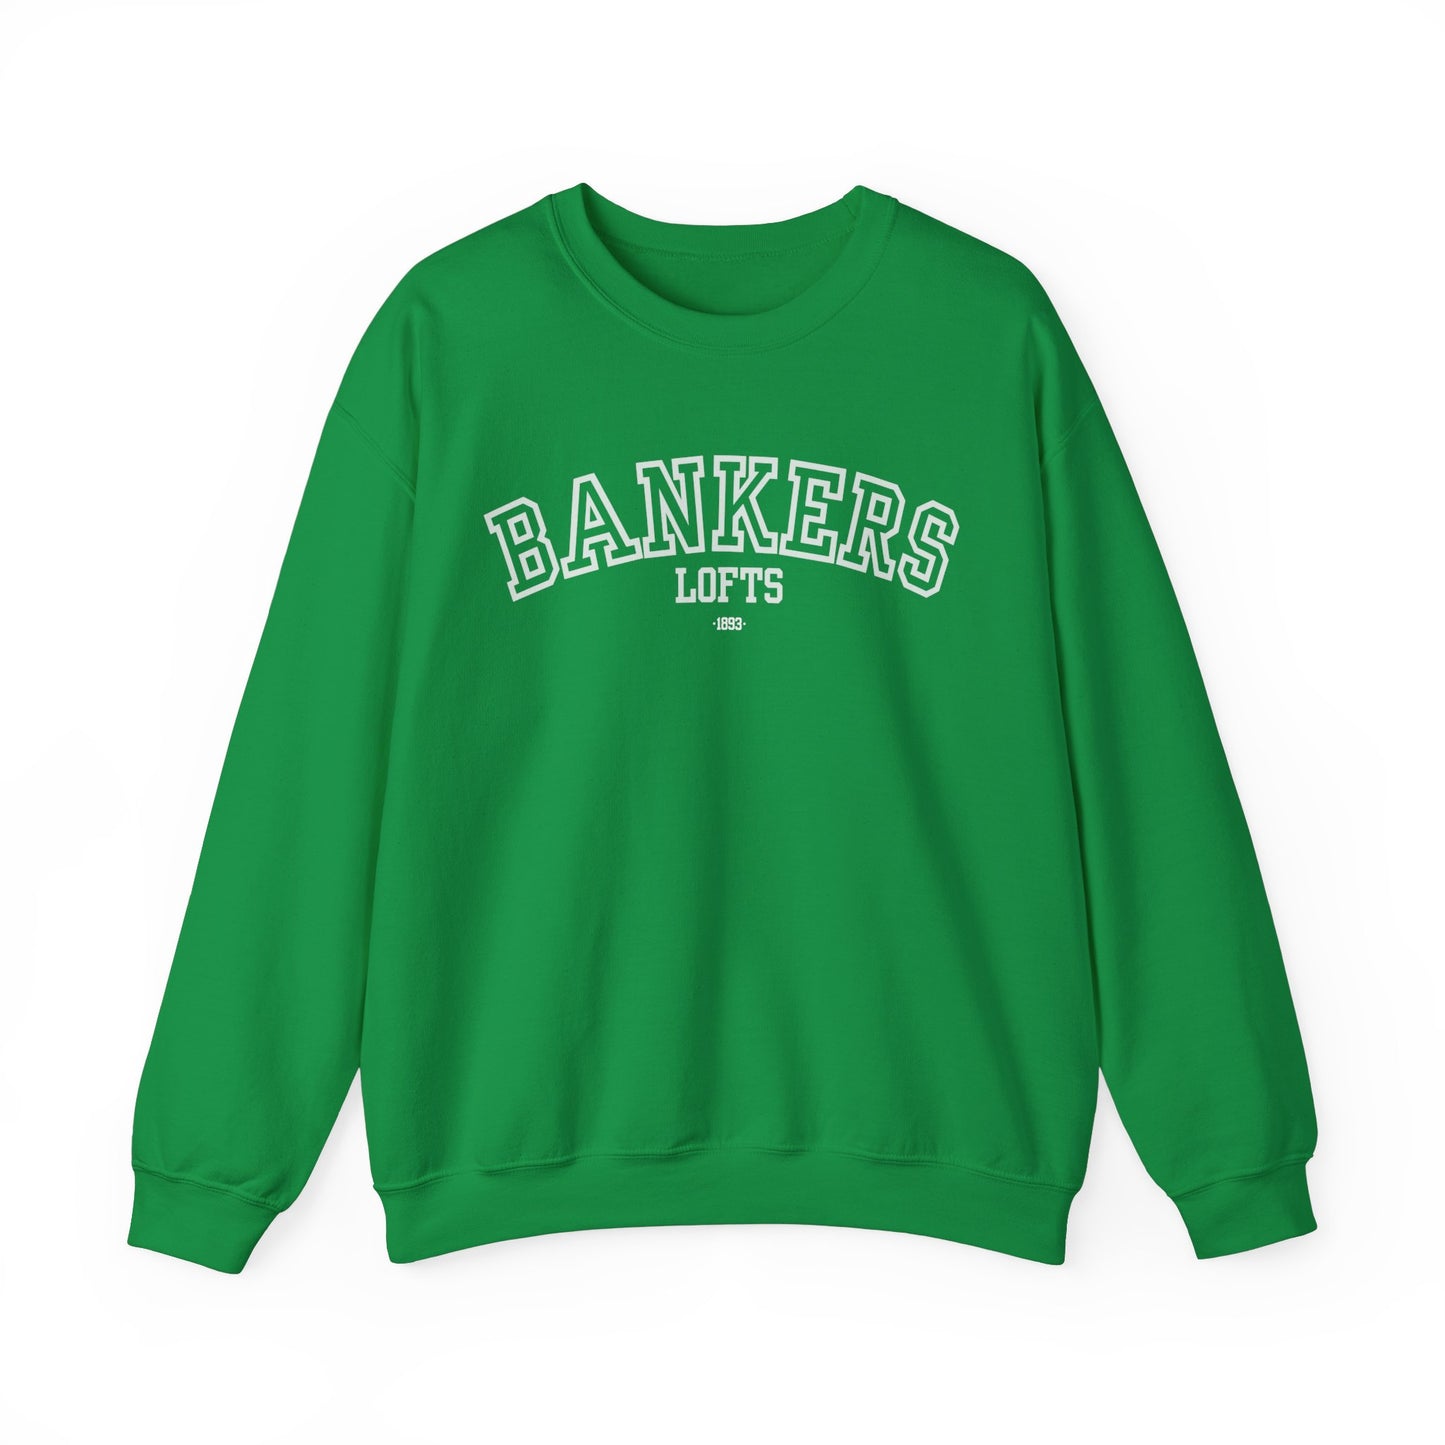 Bankers Lofts White Letter Collegiate Sweatshirt